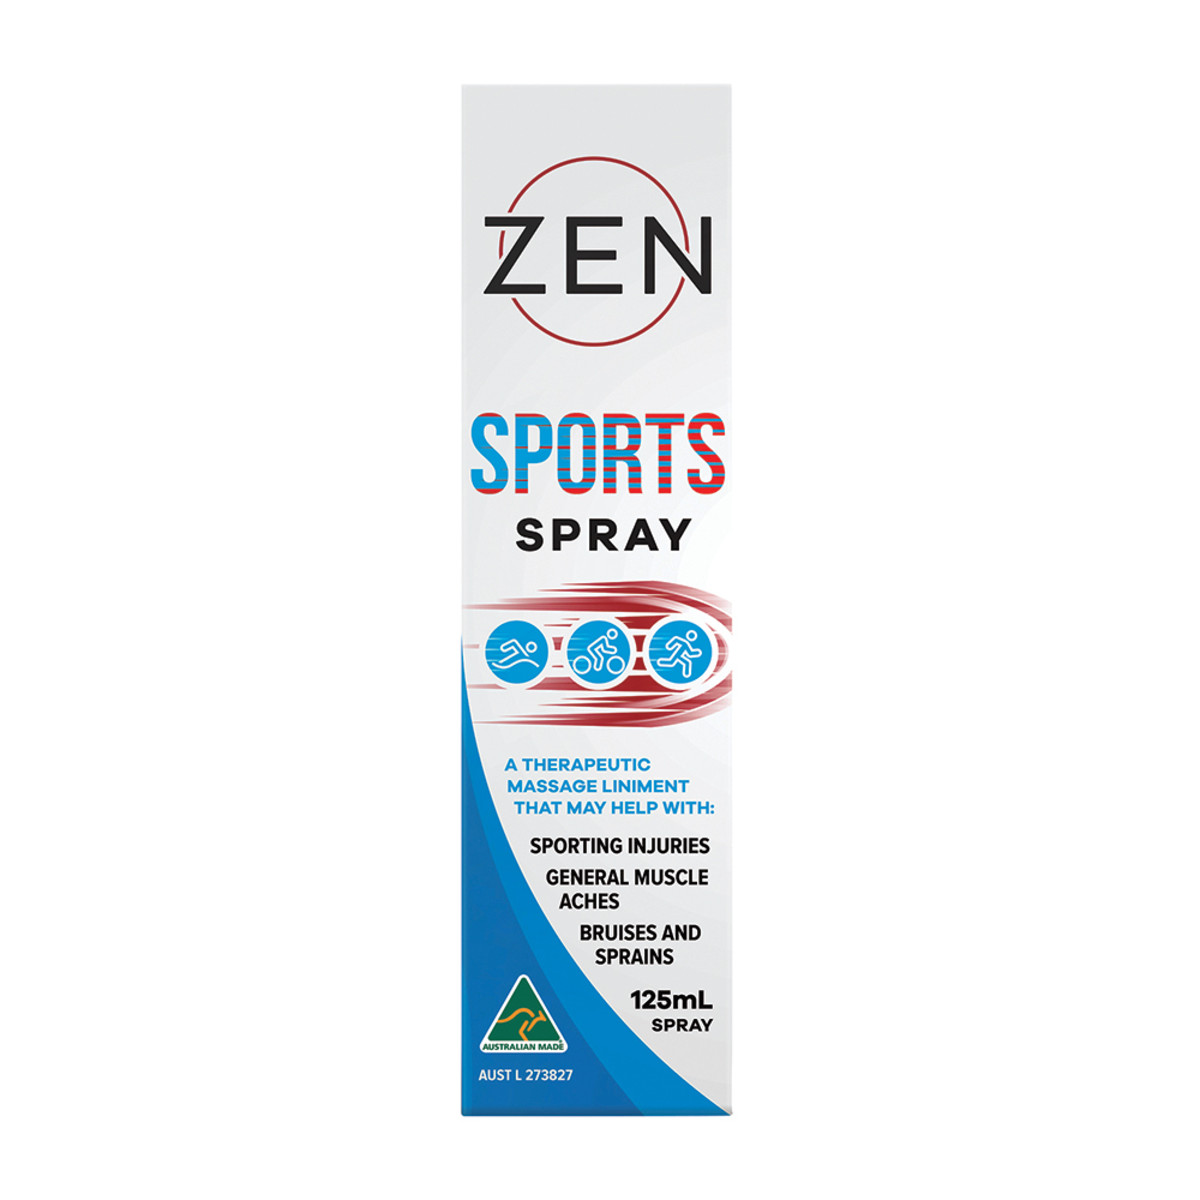 Zen Sports Spray (Therapeutic Massage Liniment) 125ml_media-01